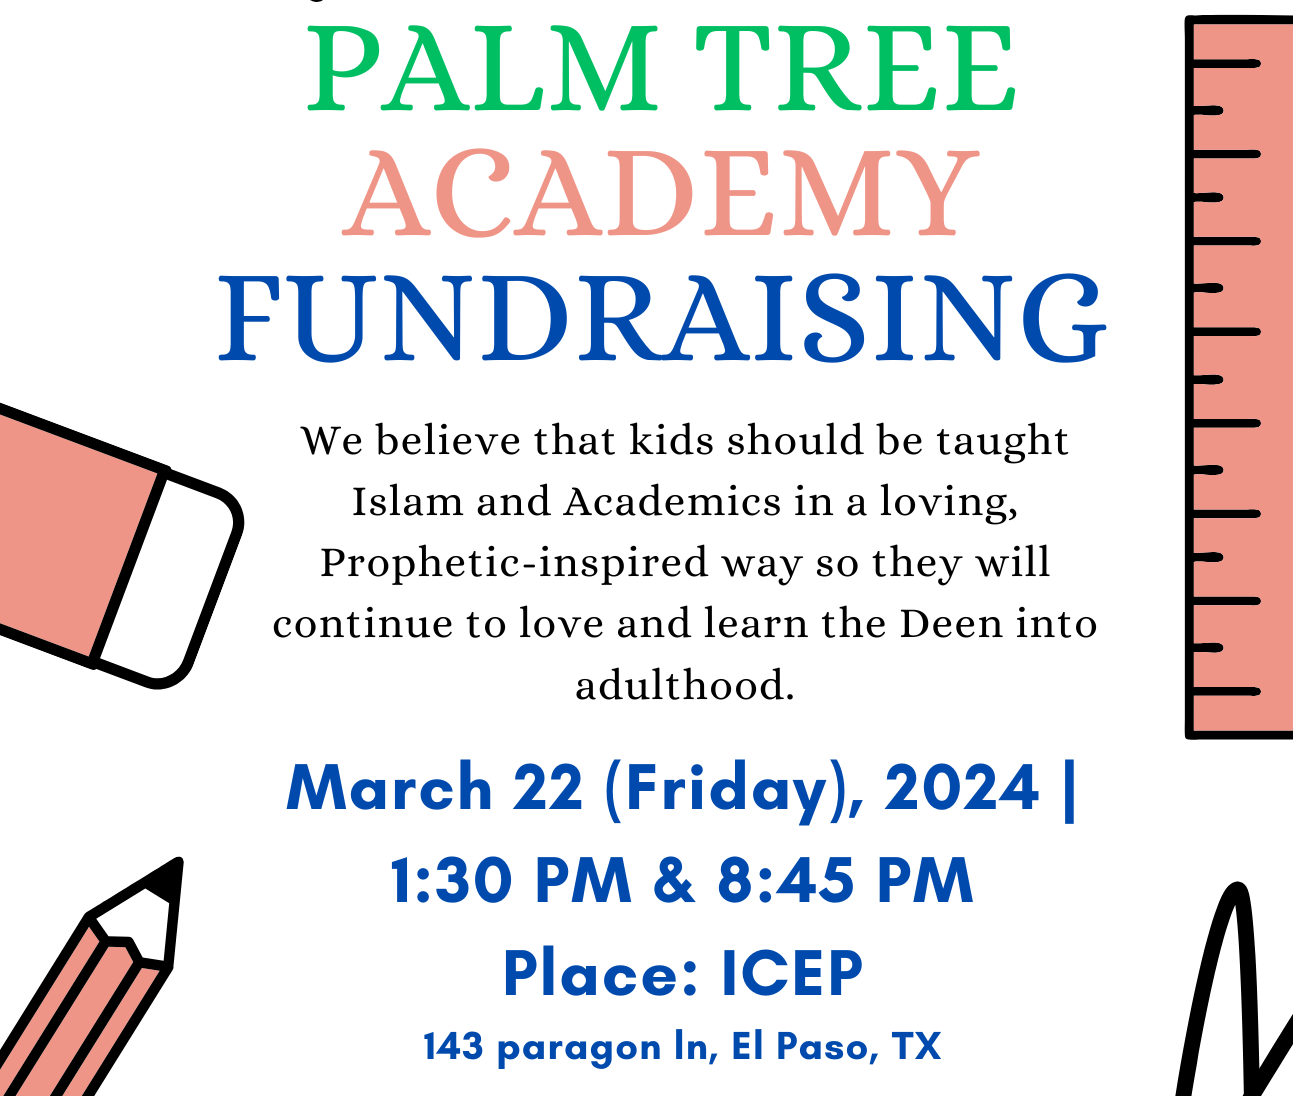 Palm Tree Academy FundRaising 03-22-2024